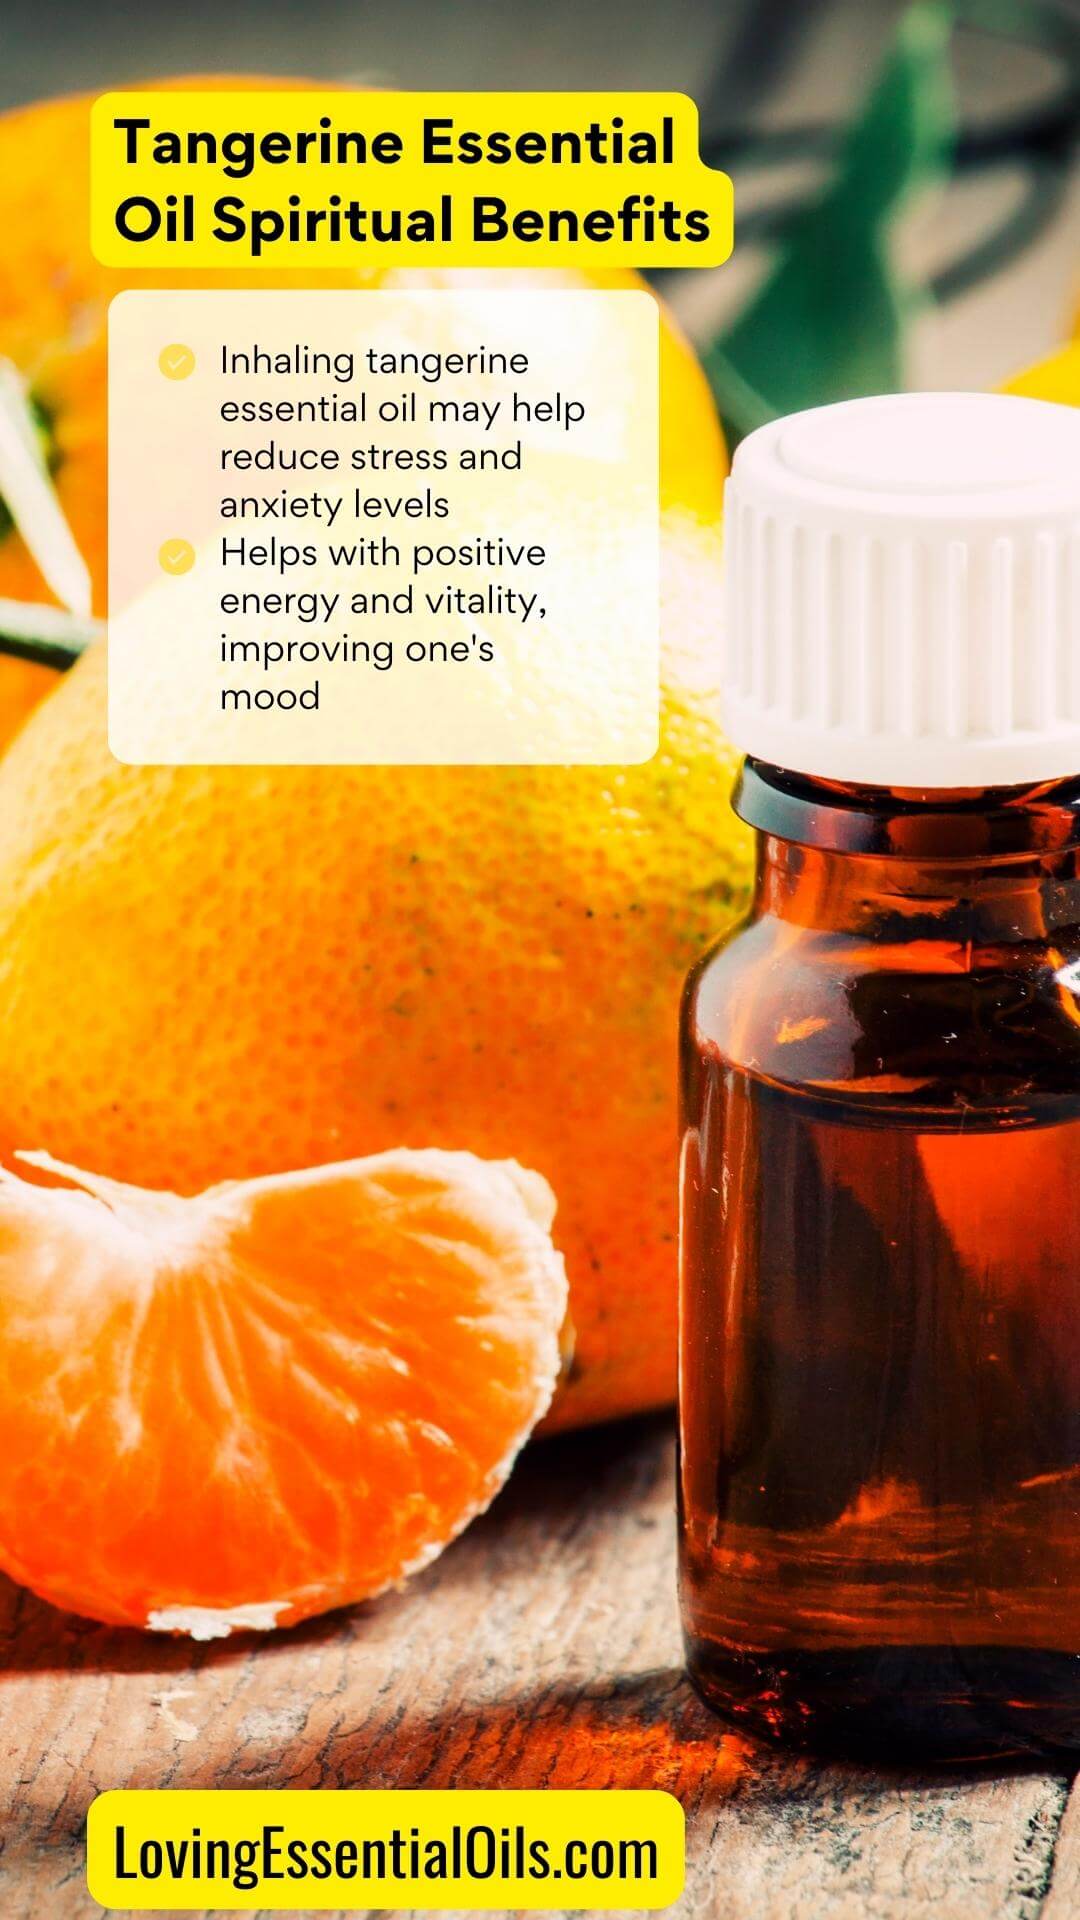 Tangerine Essential Oil for Spirituality